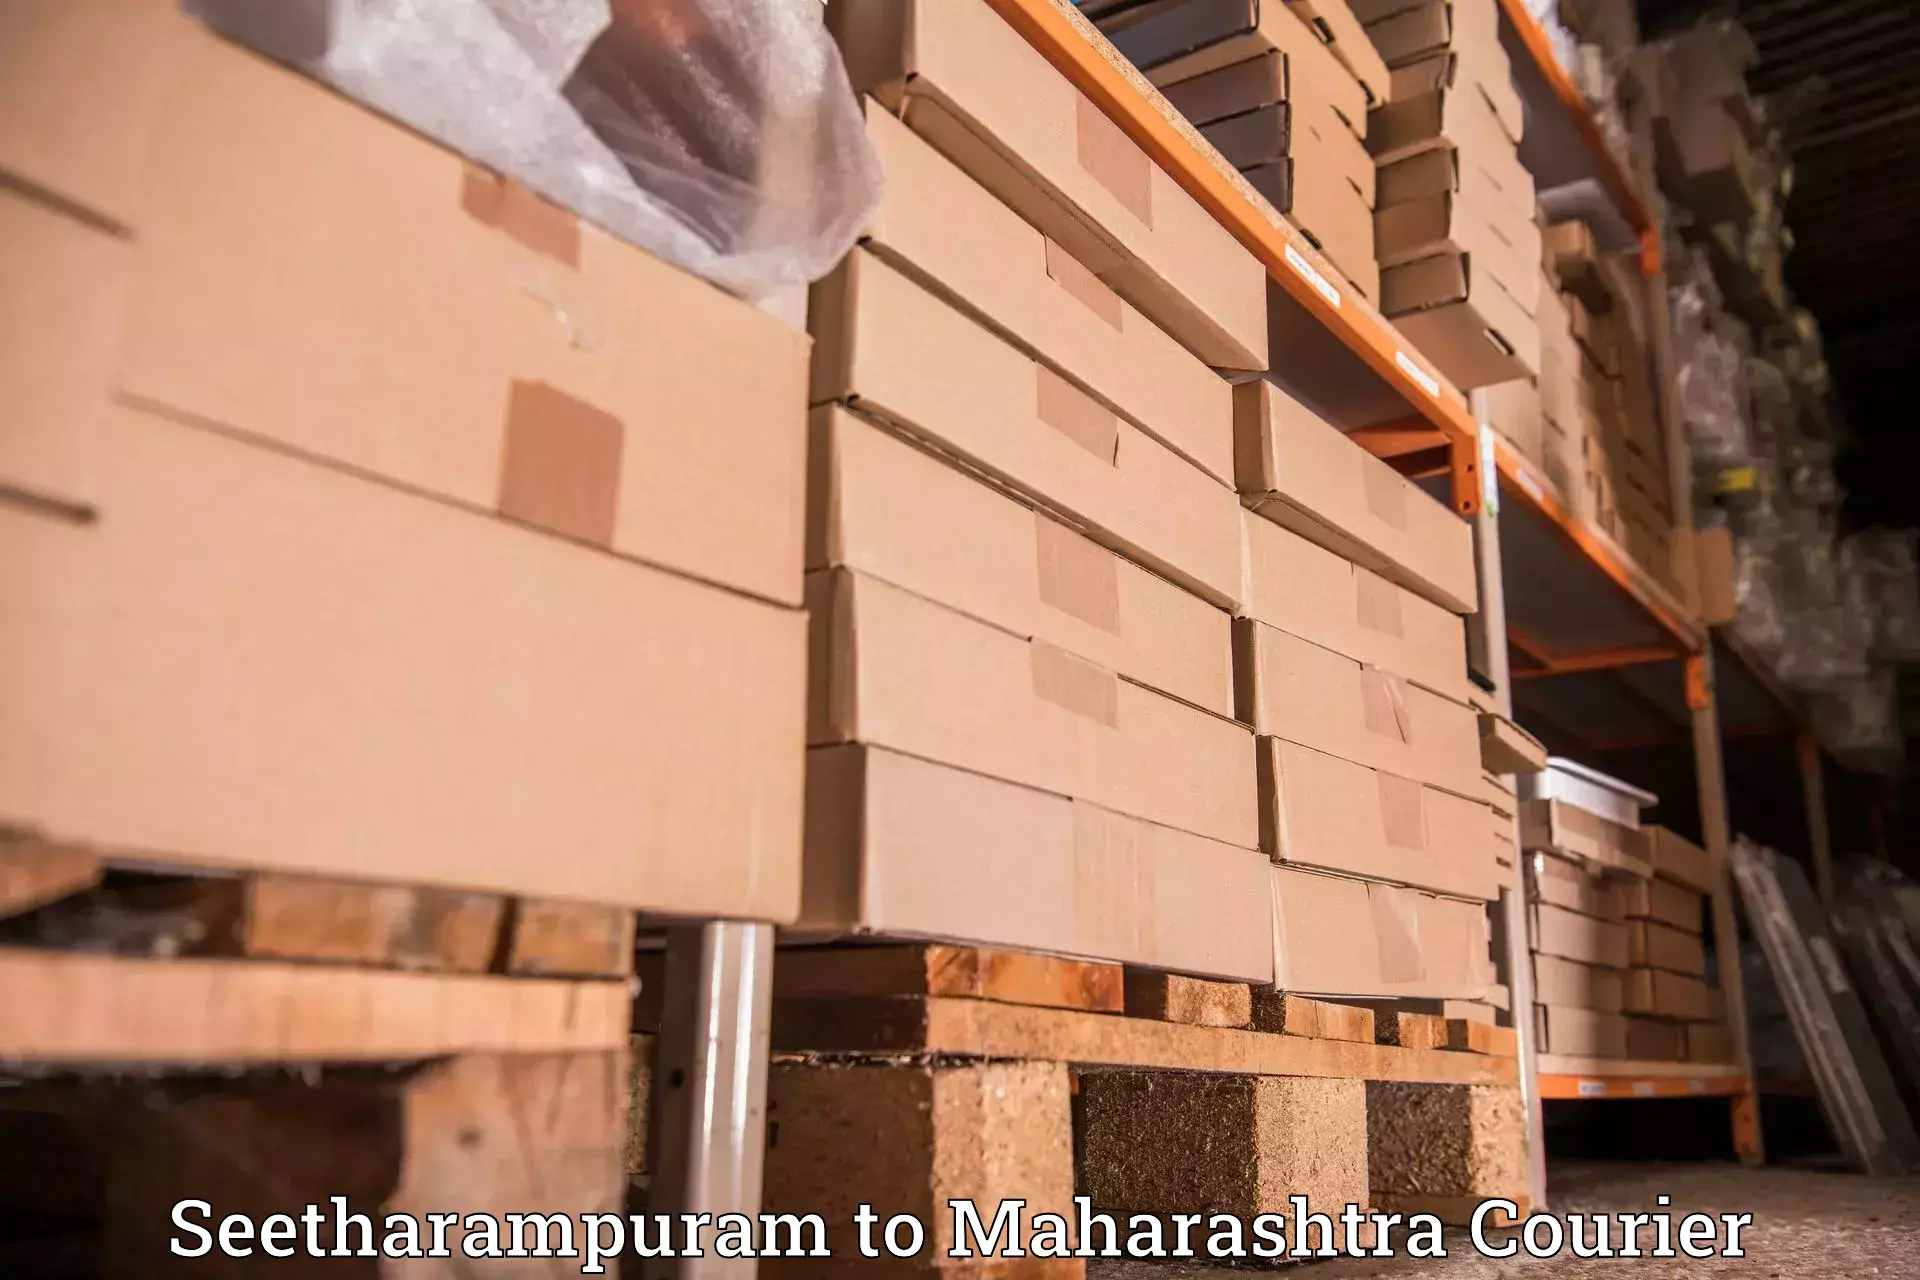 Courier service partnerships in Seetharampuram to Shirala